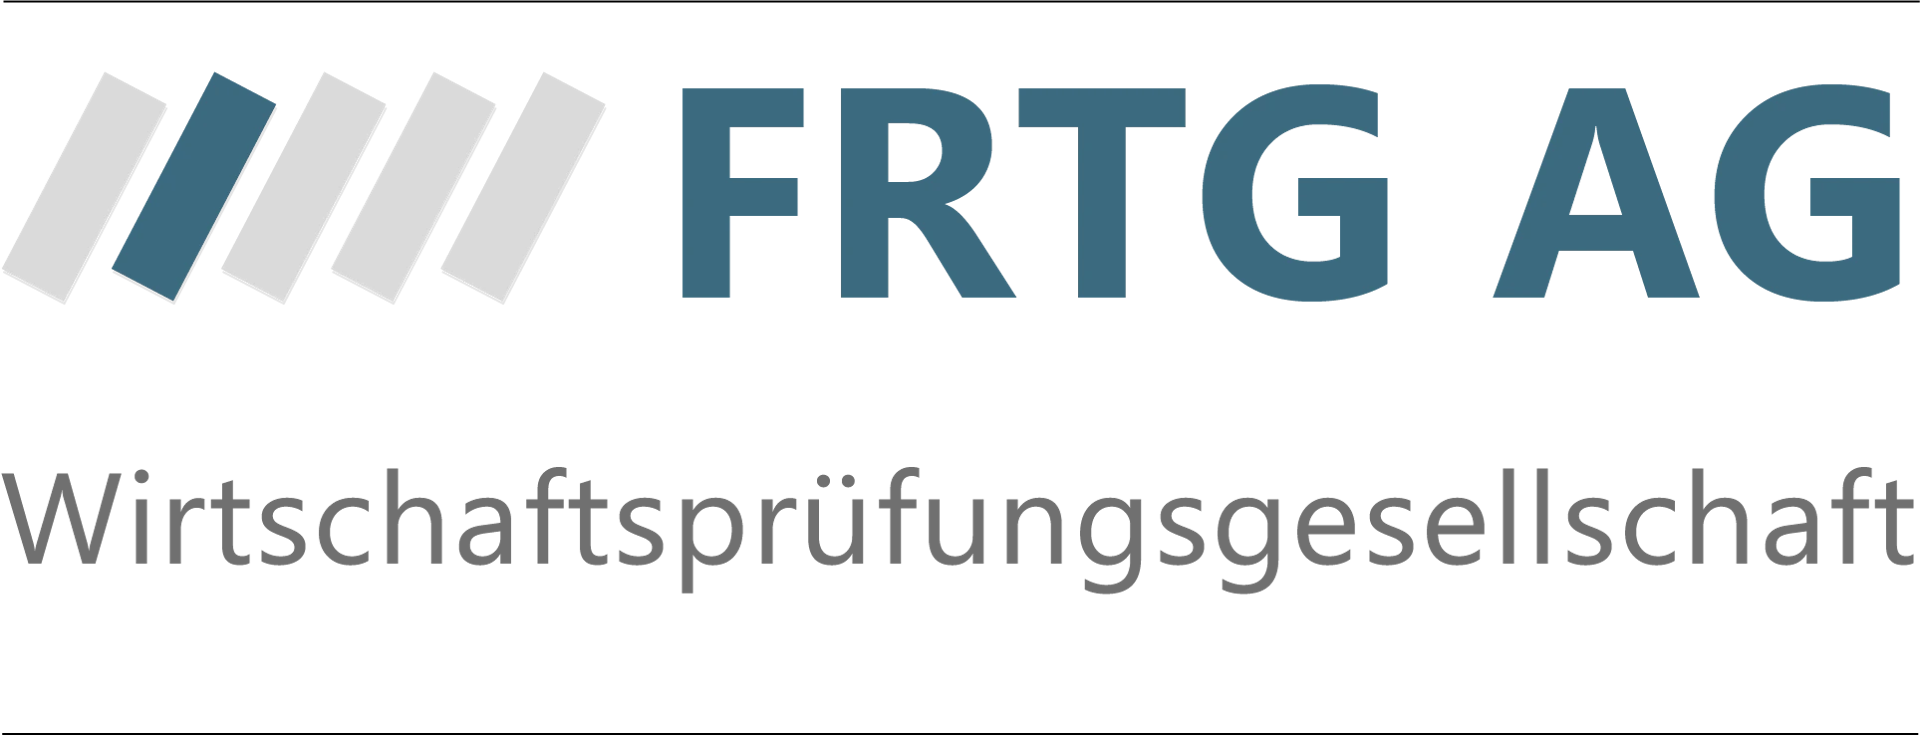 FRTG AG Wirtschaftsprüfungsgesellschaft